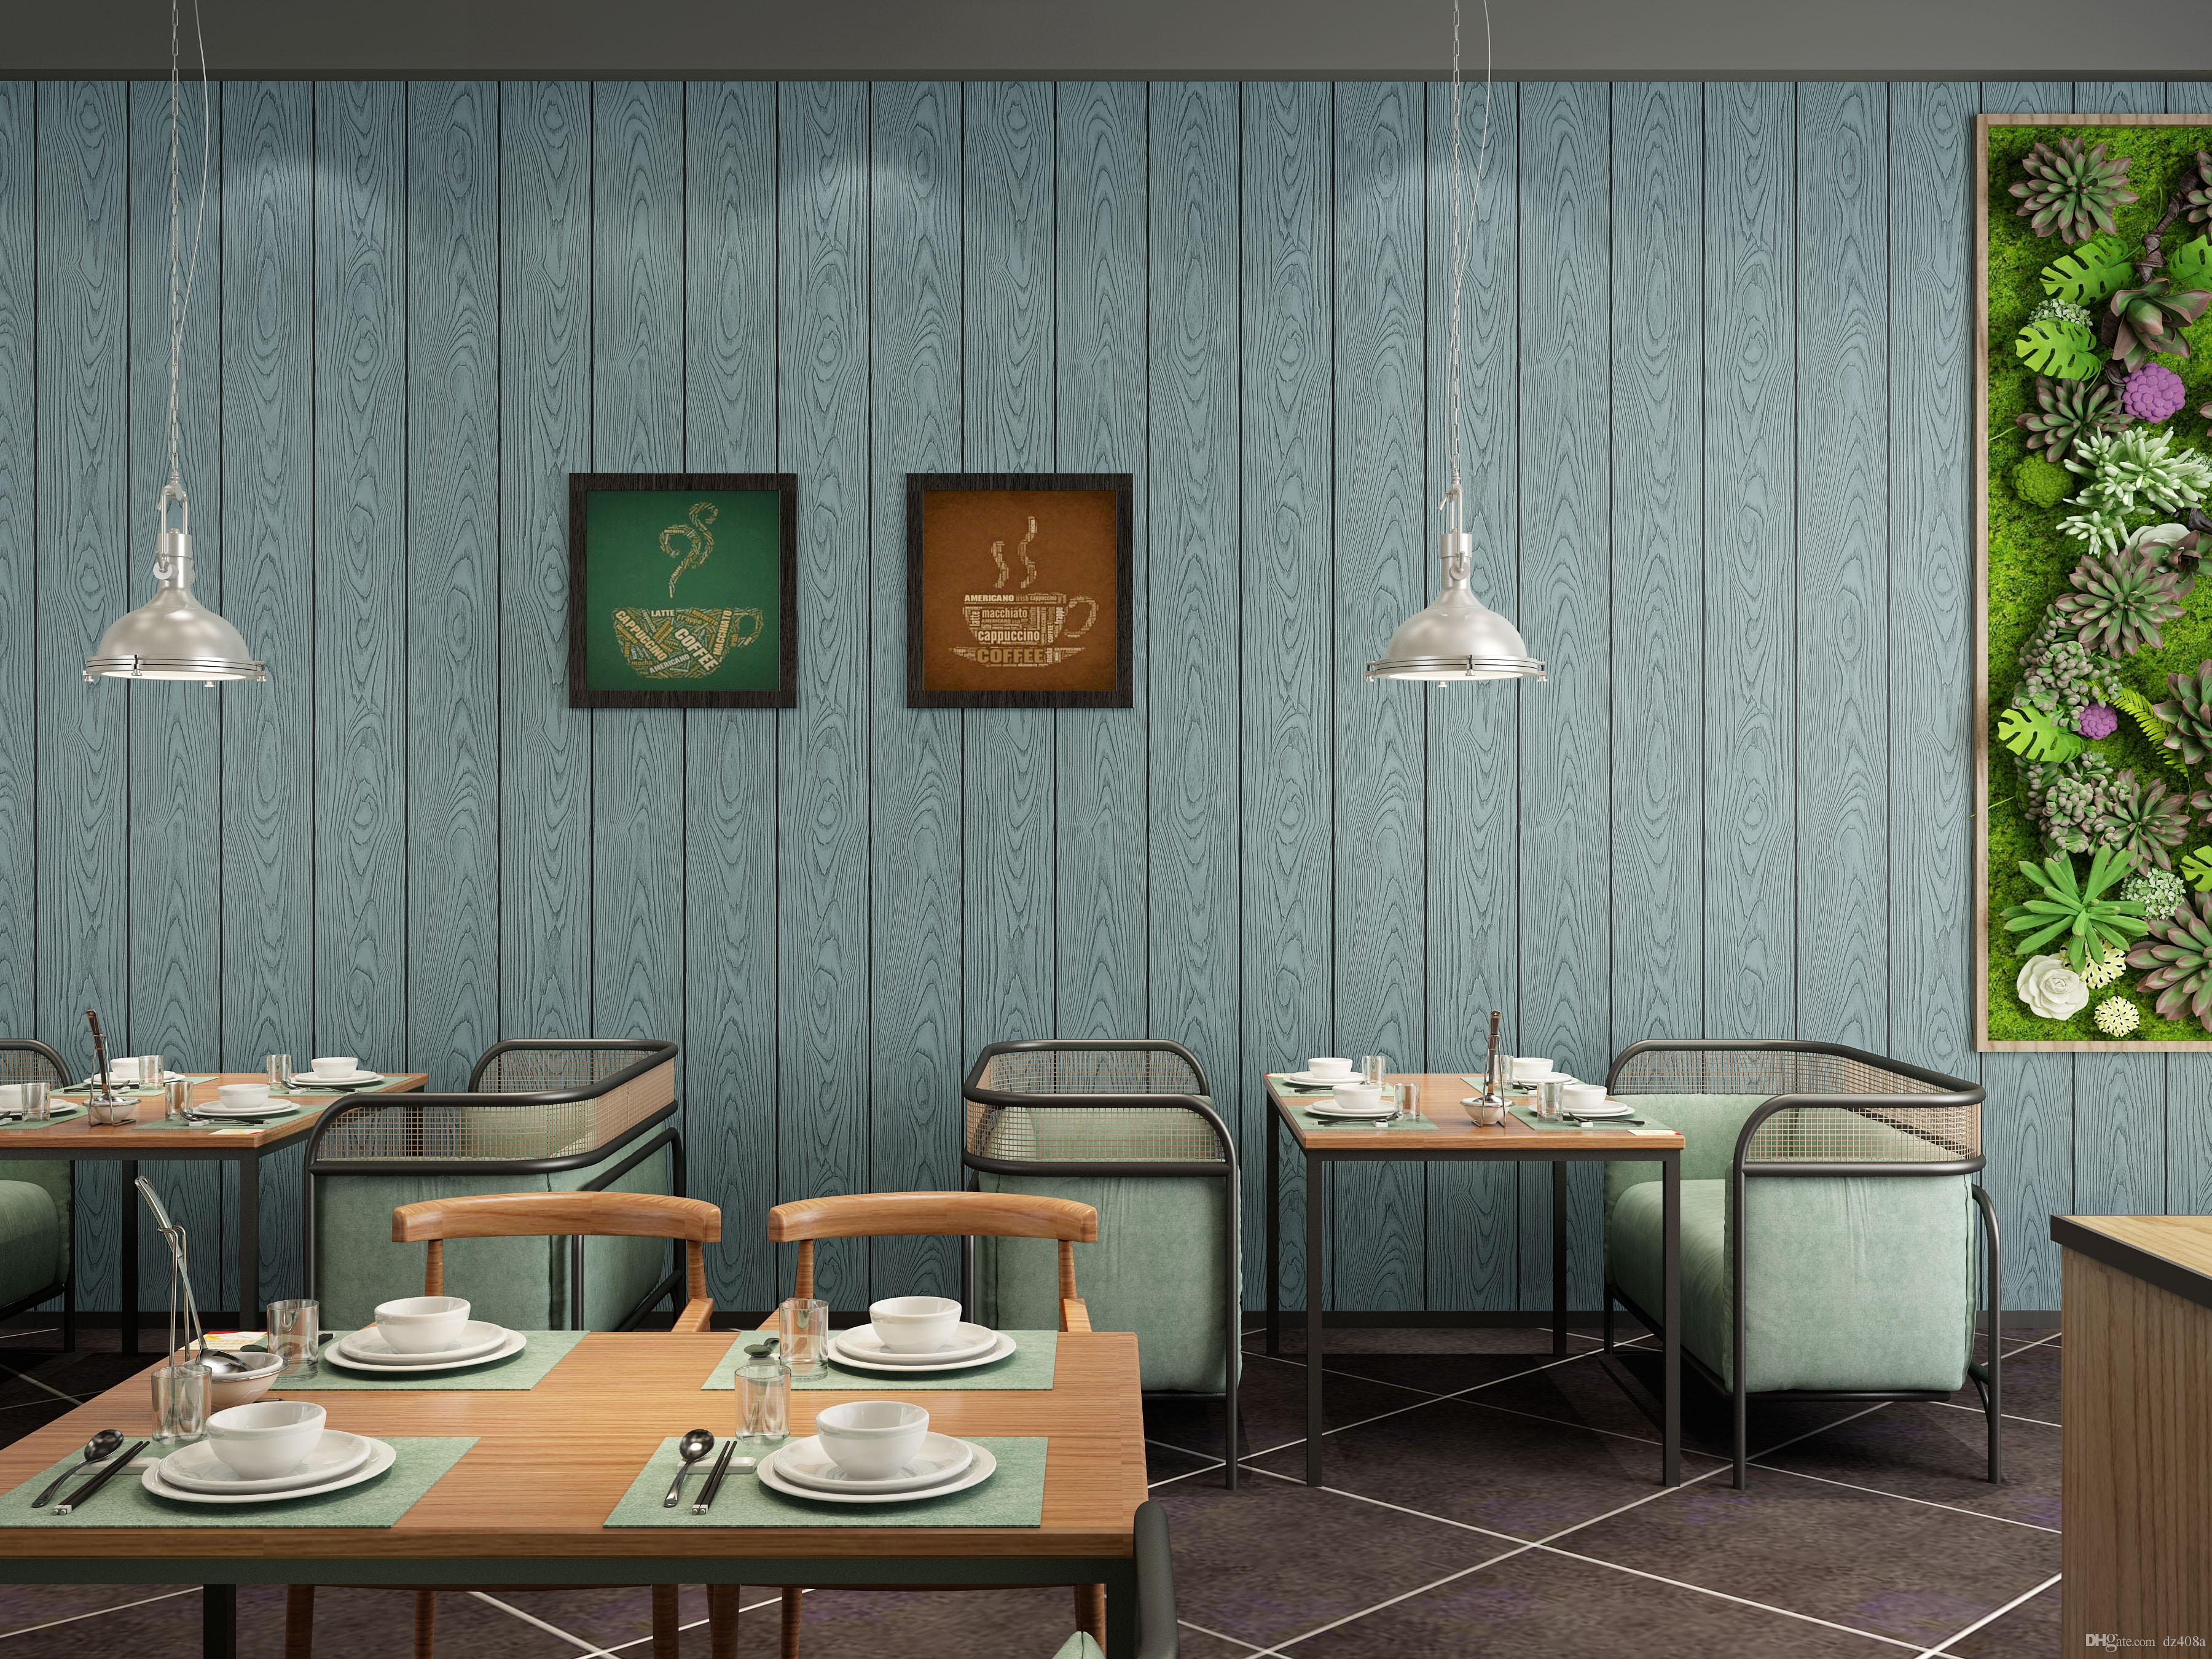 3d Wallpapers For Restaurant - 3600x2700 Wallpaper 